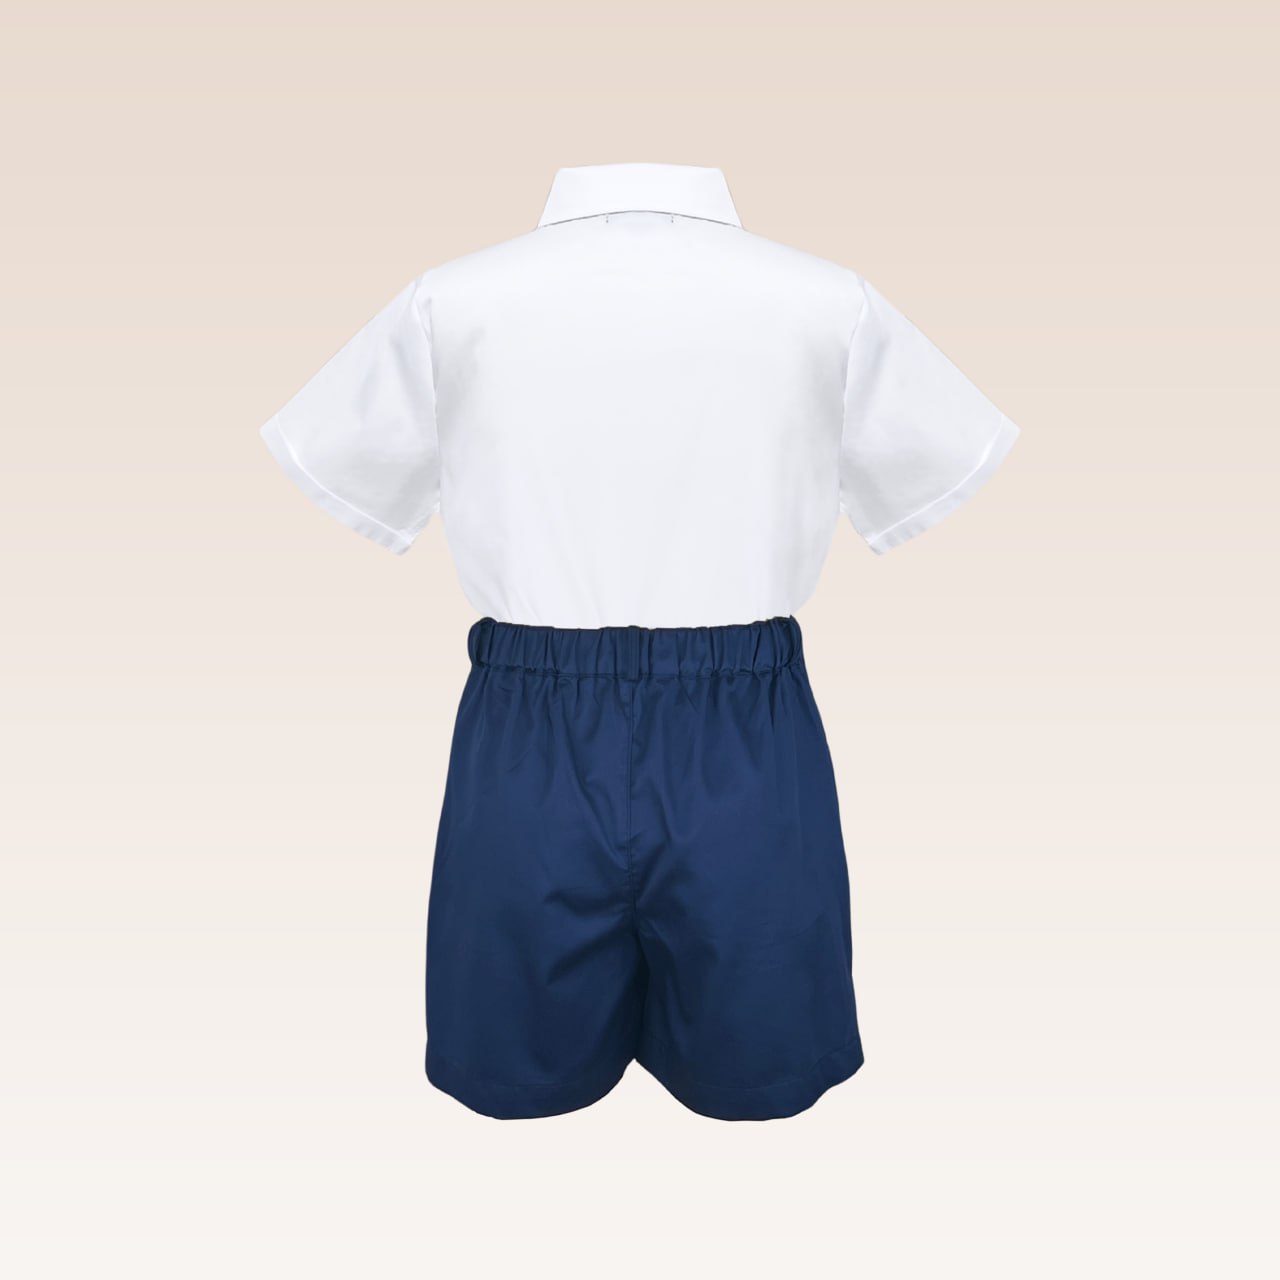 Lyam Boys Navy Collared Shirt with Smock detail and Shorts set